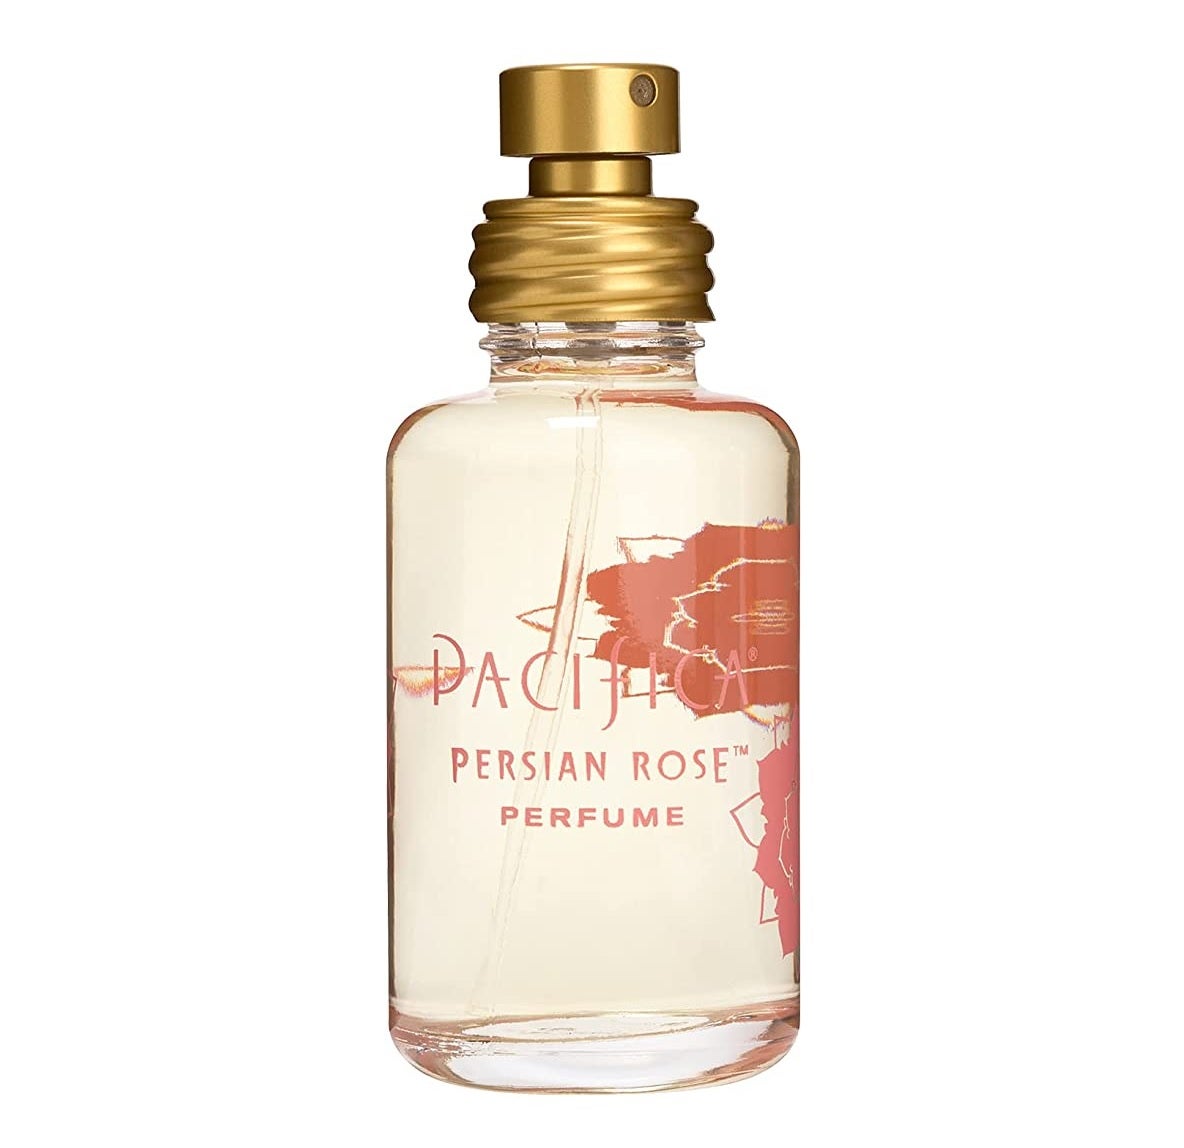 Pacifica Persian Rose Women's Perfume